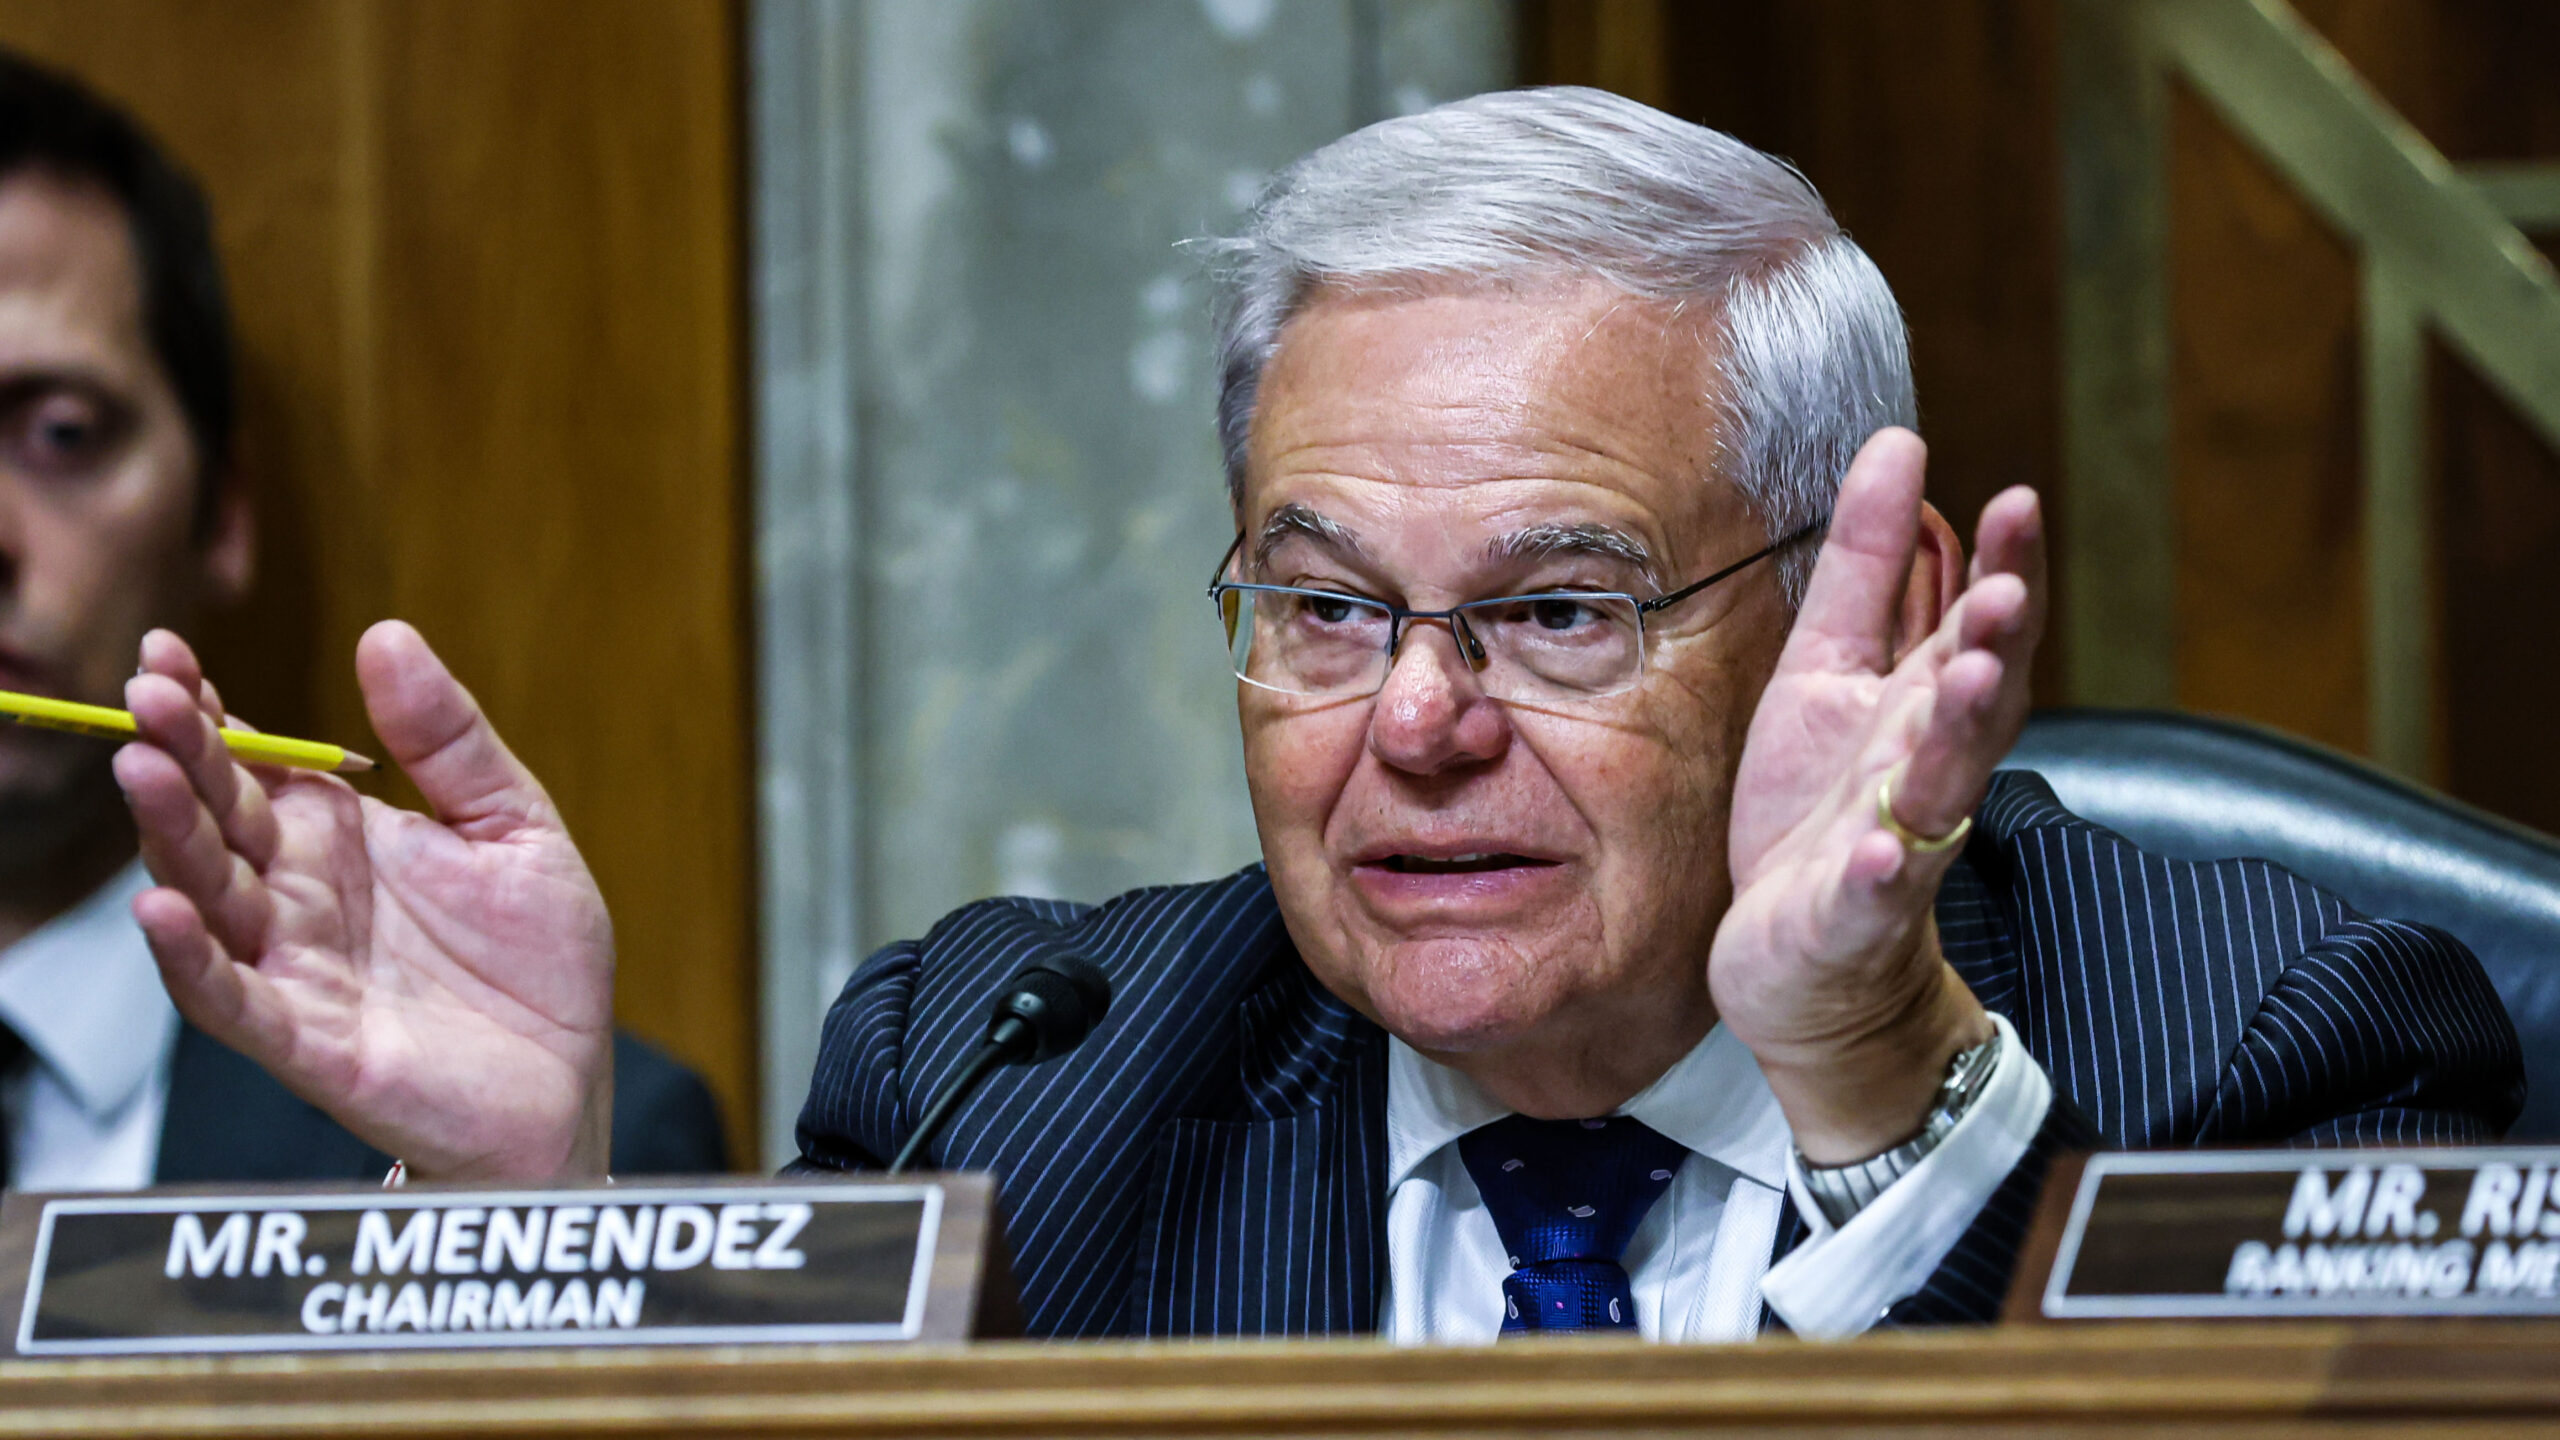 Many Democrat Senators urge Bob Menendez to step down amidst corruption allegations.